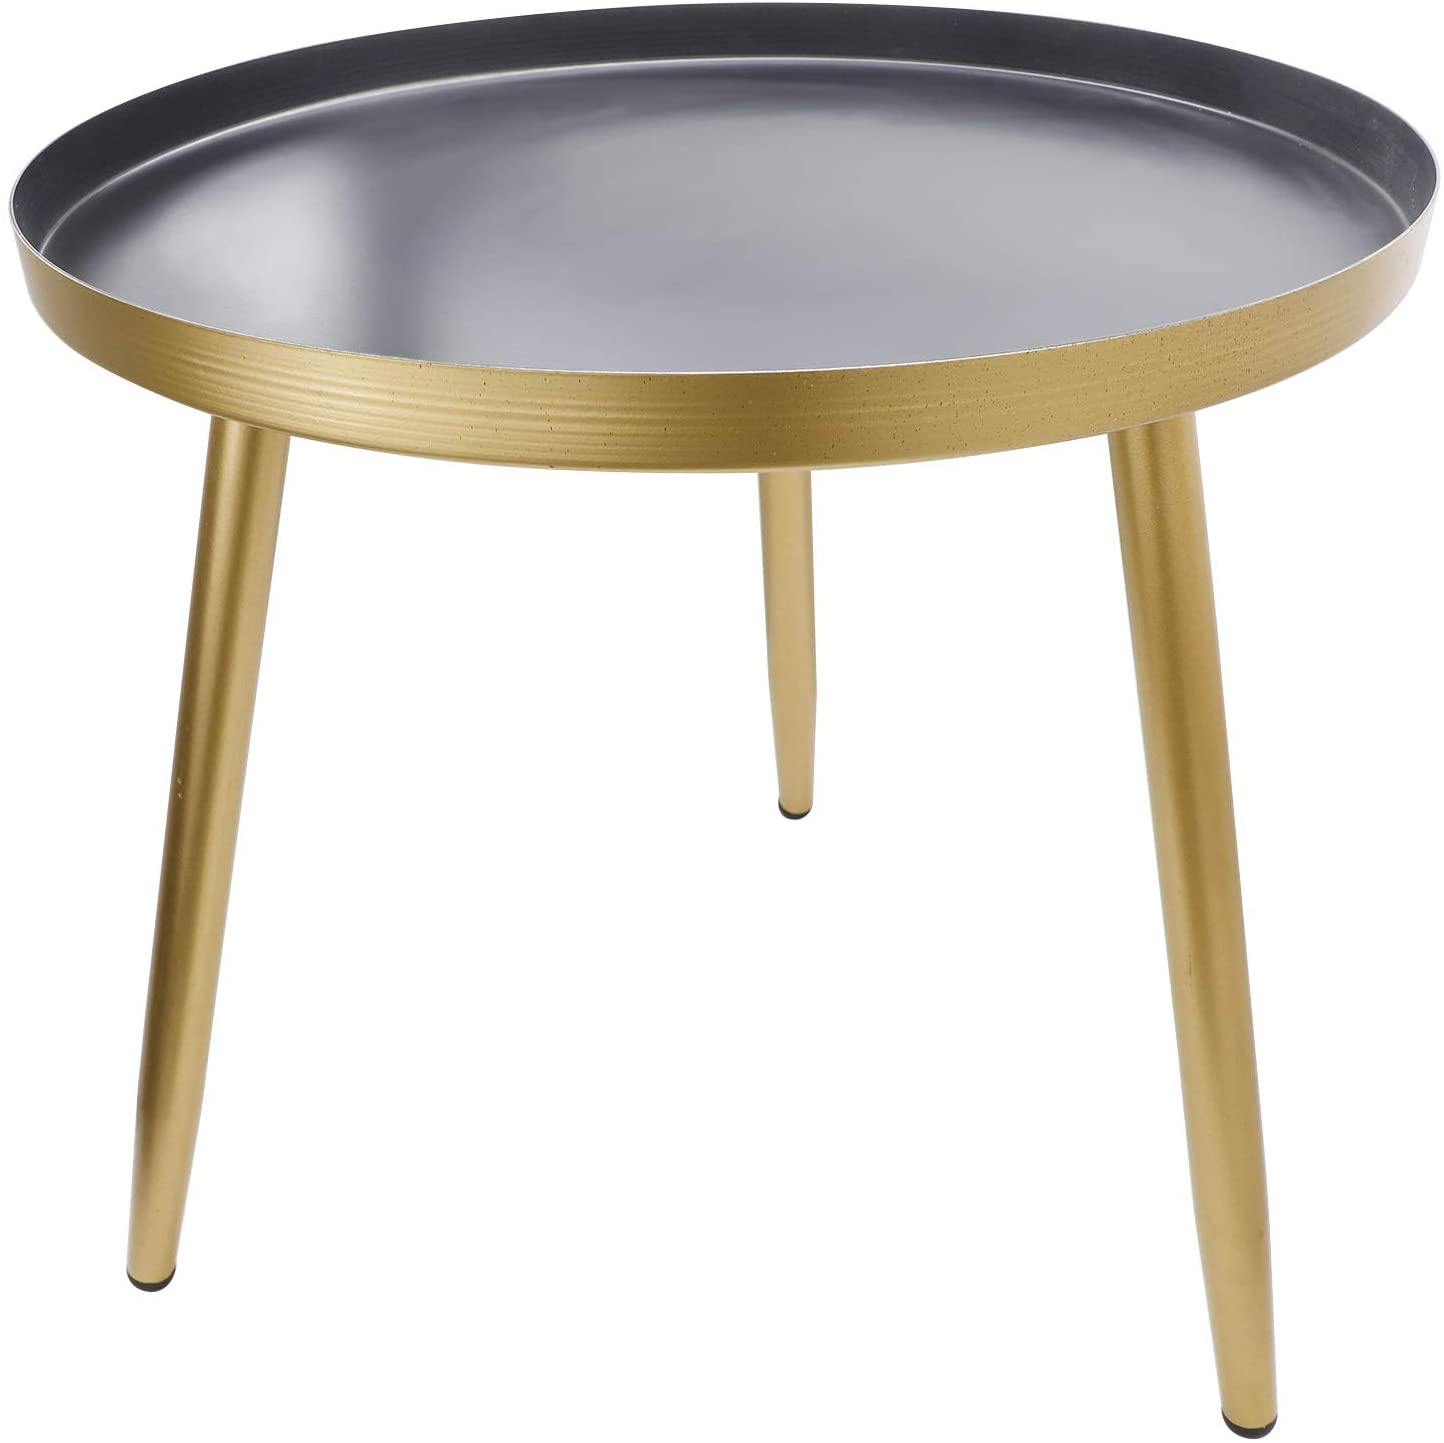 Round Side Metal Table, Tea Sofa Table for Living Room Bedroom,Anti-Rust and Waterproof, Black - image 2 of 8